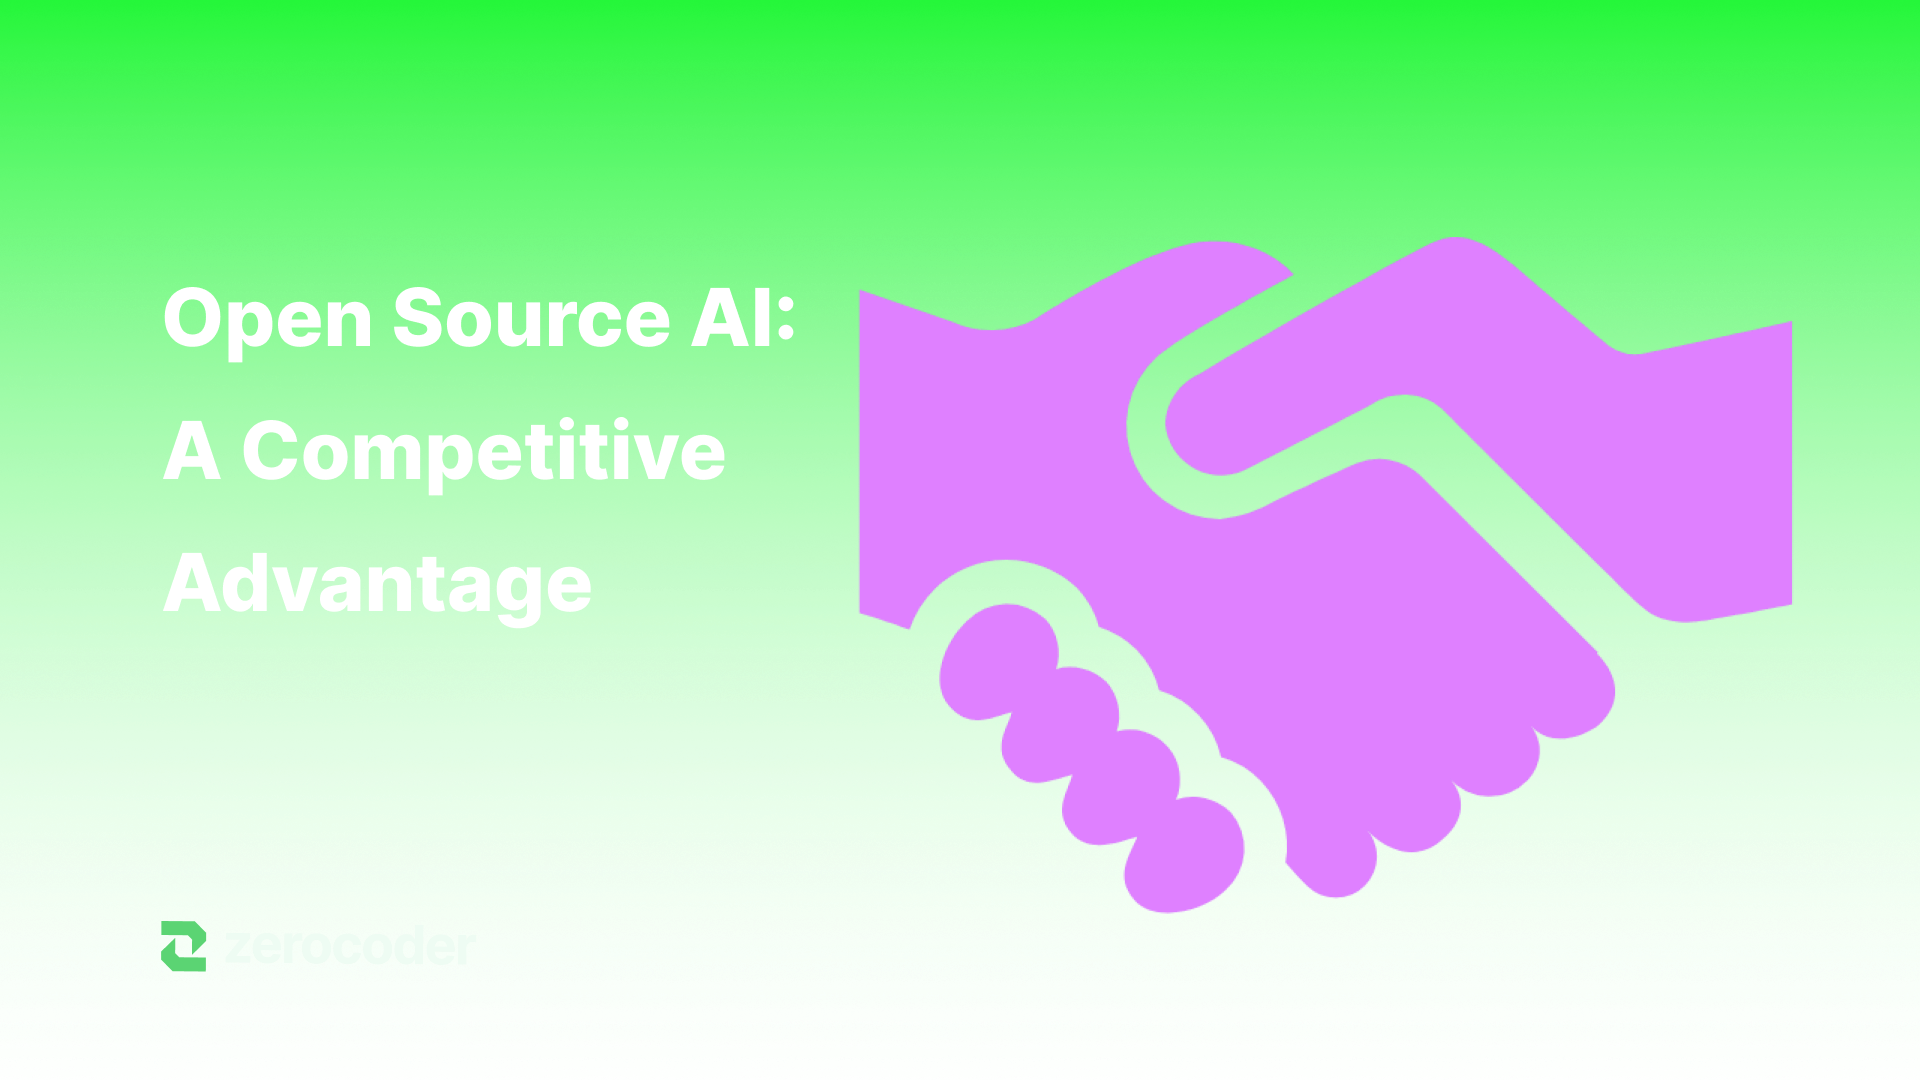 Open Source AI: A Competitive Advantage